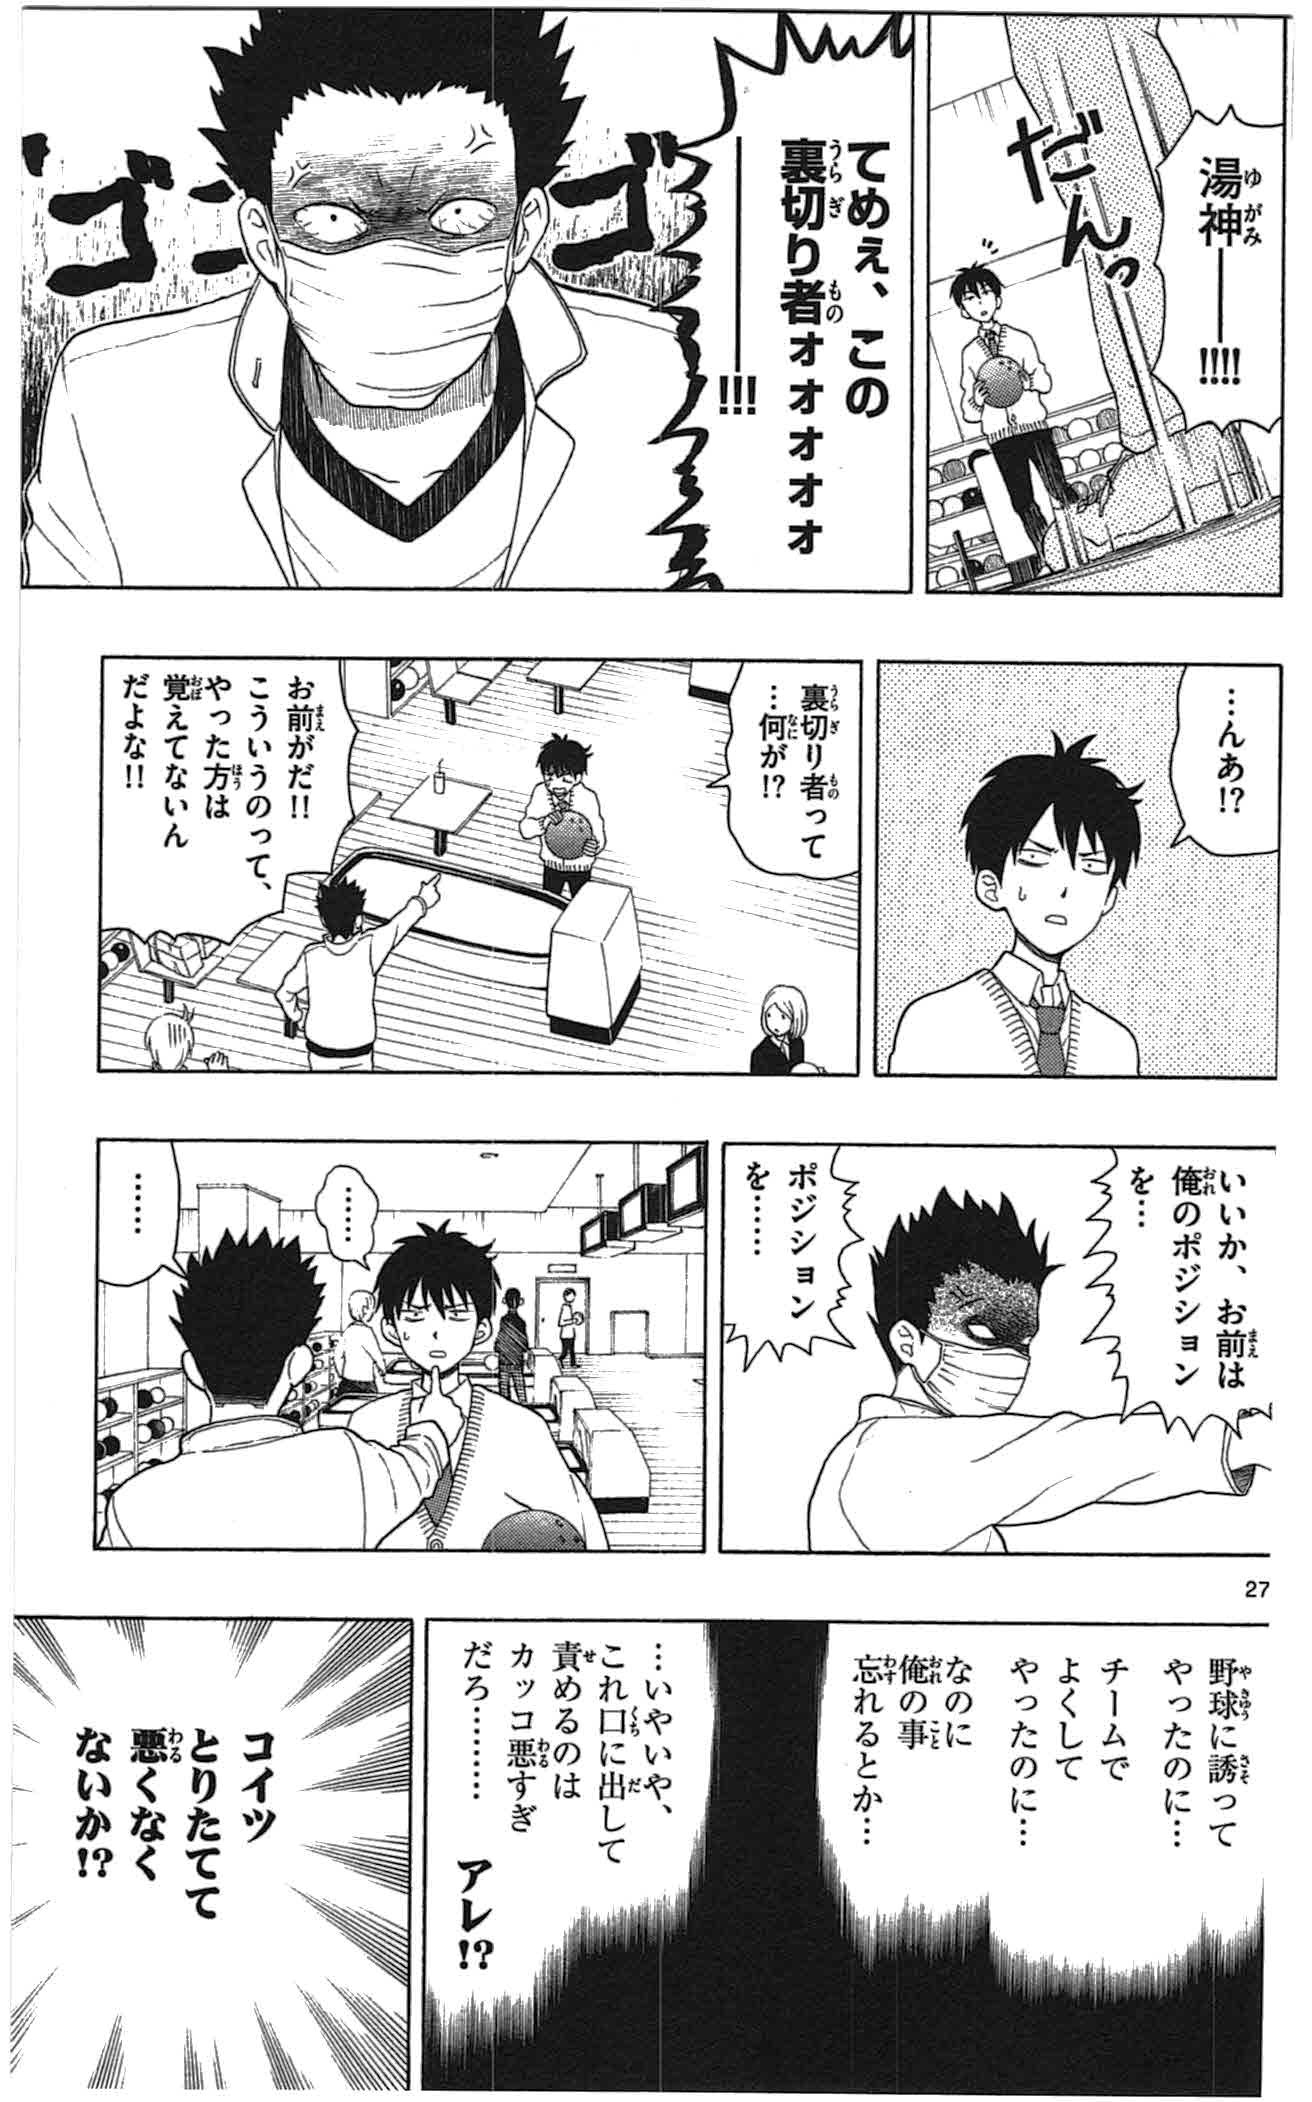 Yugami-kun ni wa Tomodachi ga Inai - Chapter 004 - Page 27